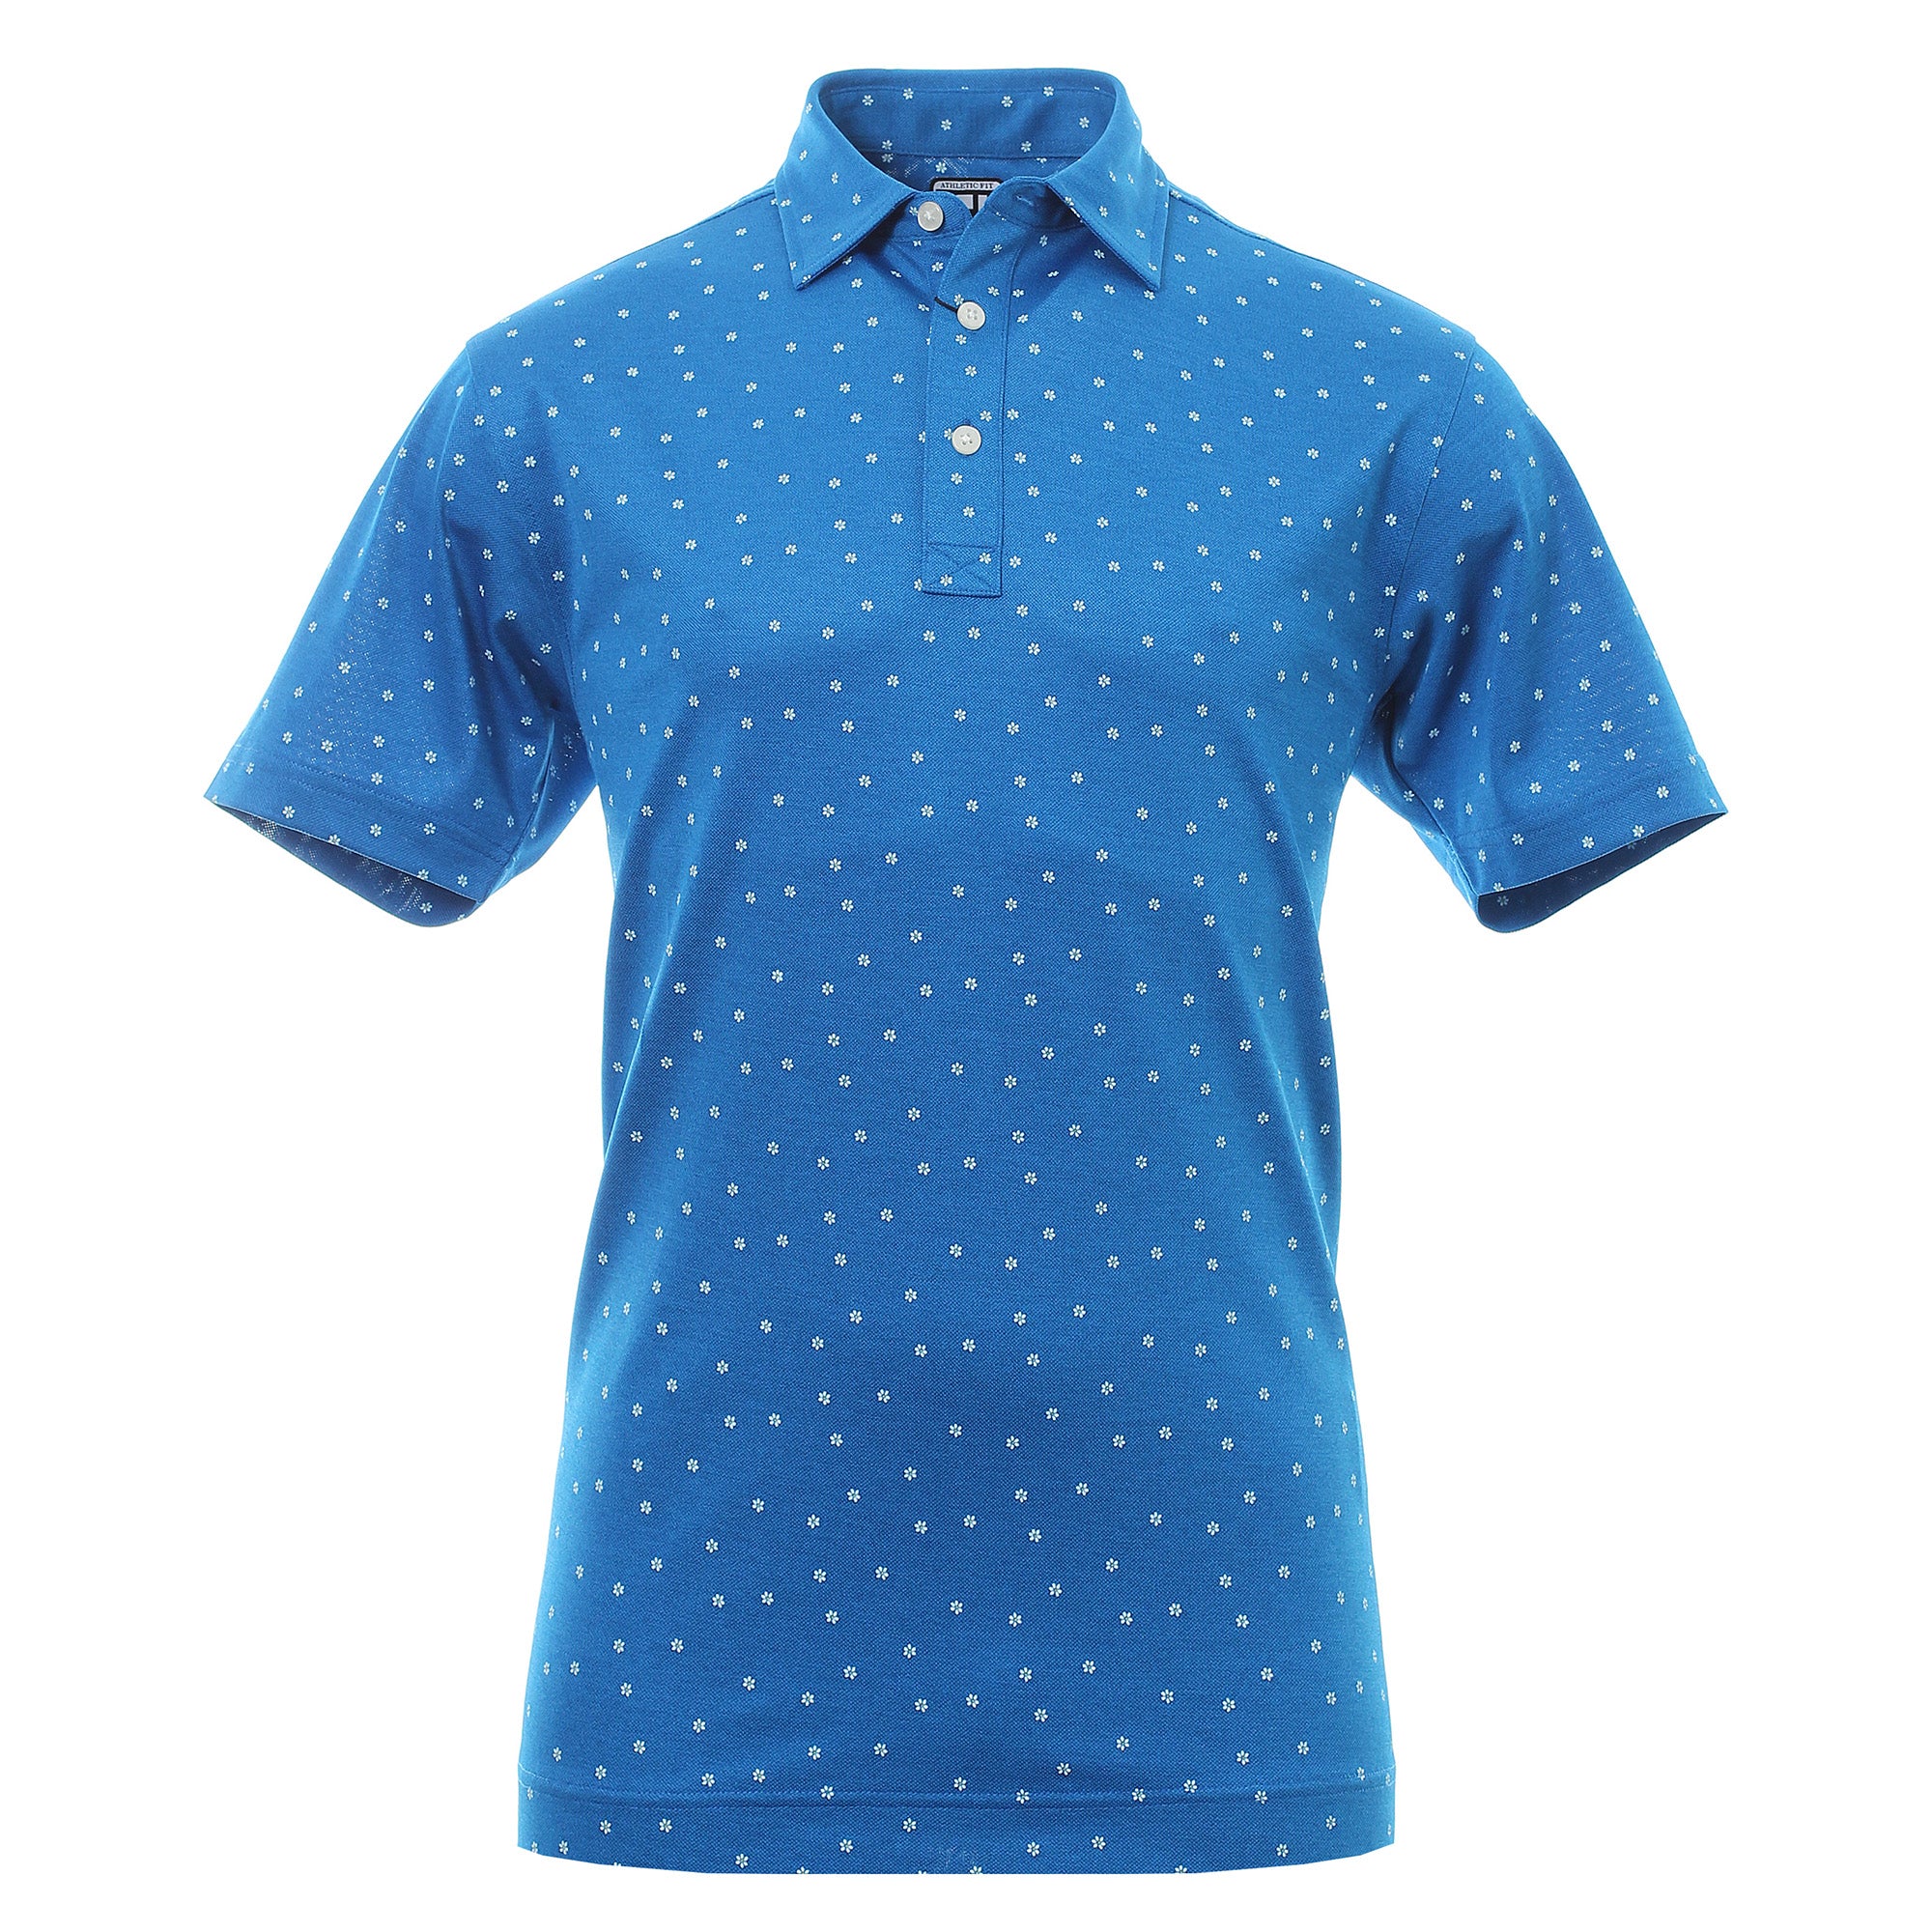 FootJoy Flower Print Golf Shirt 92409 & Function18